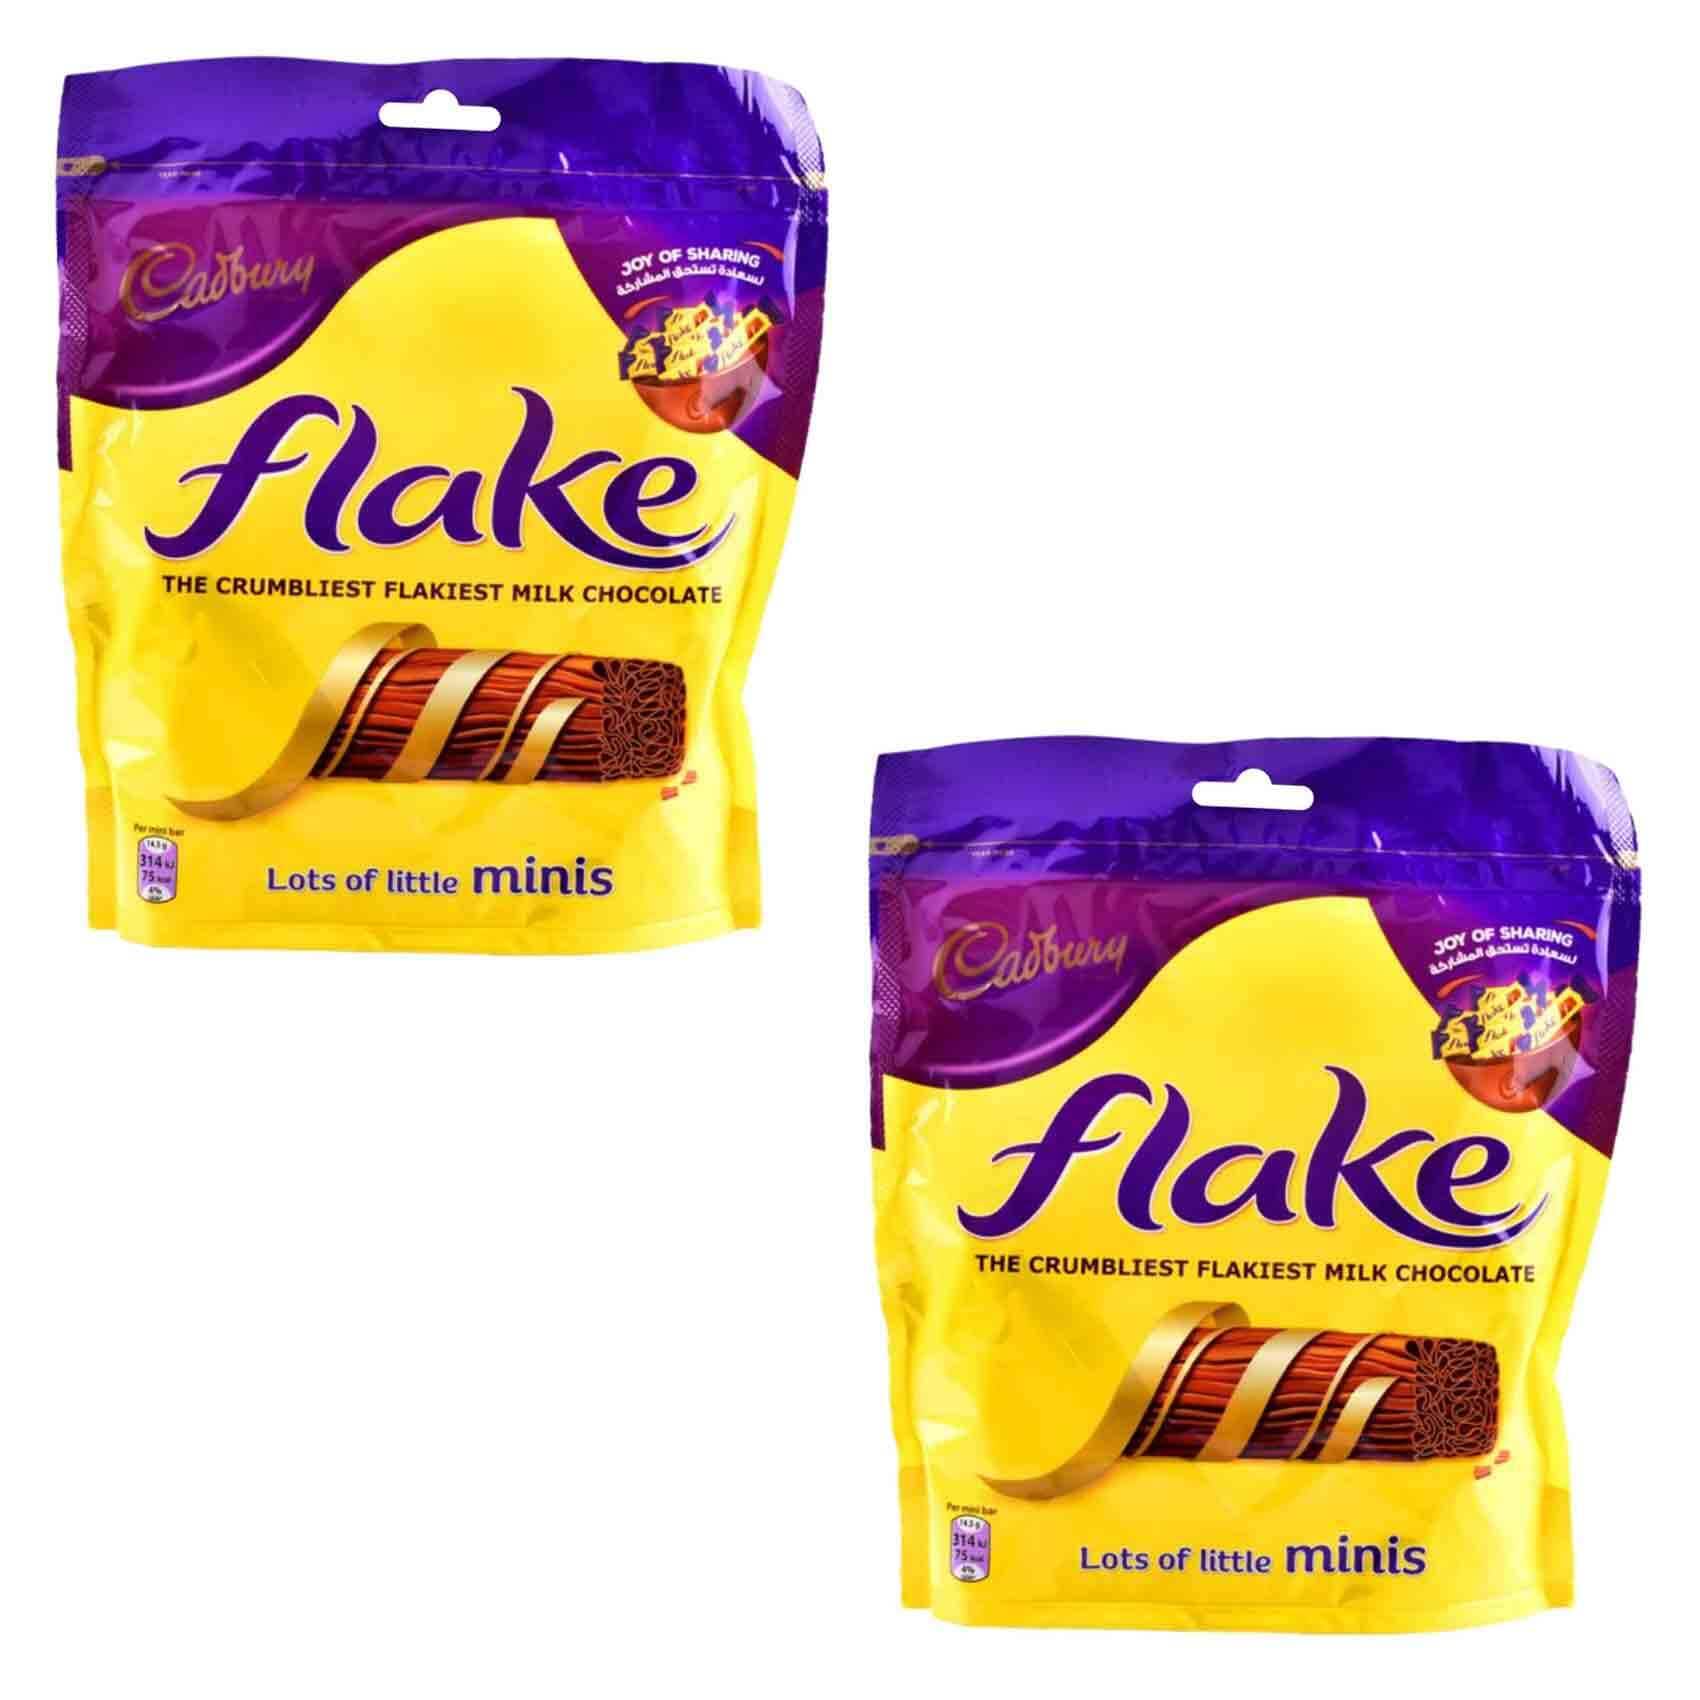 Cadbury Flake Chocolate Bar (Pack of 2) - 2.2 oz / 64 g